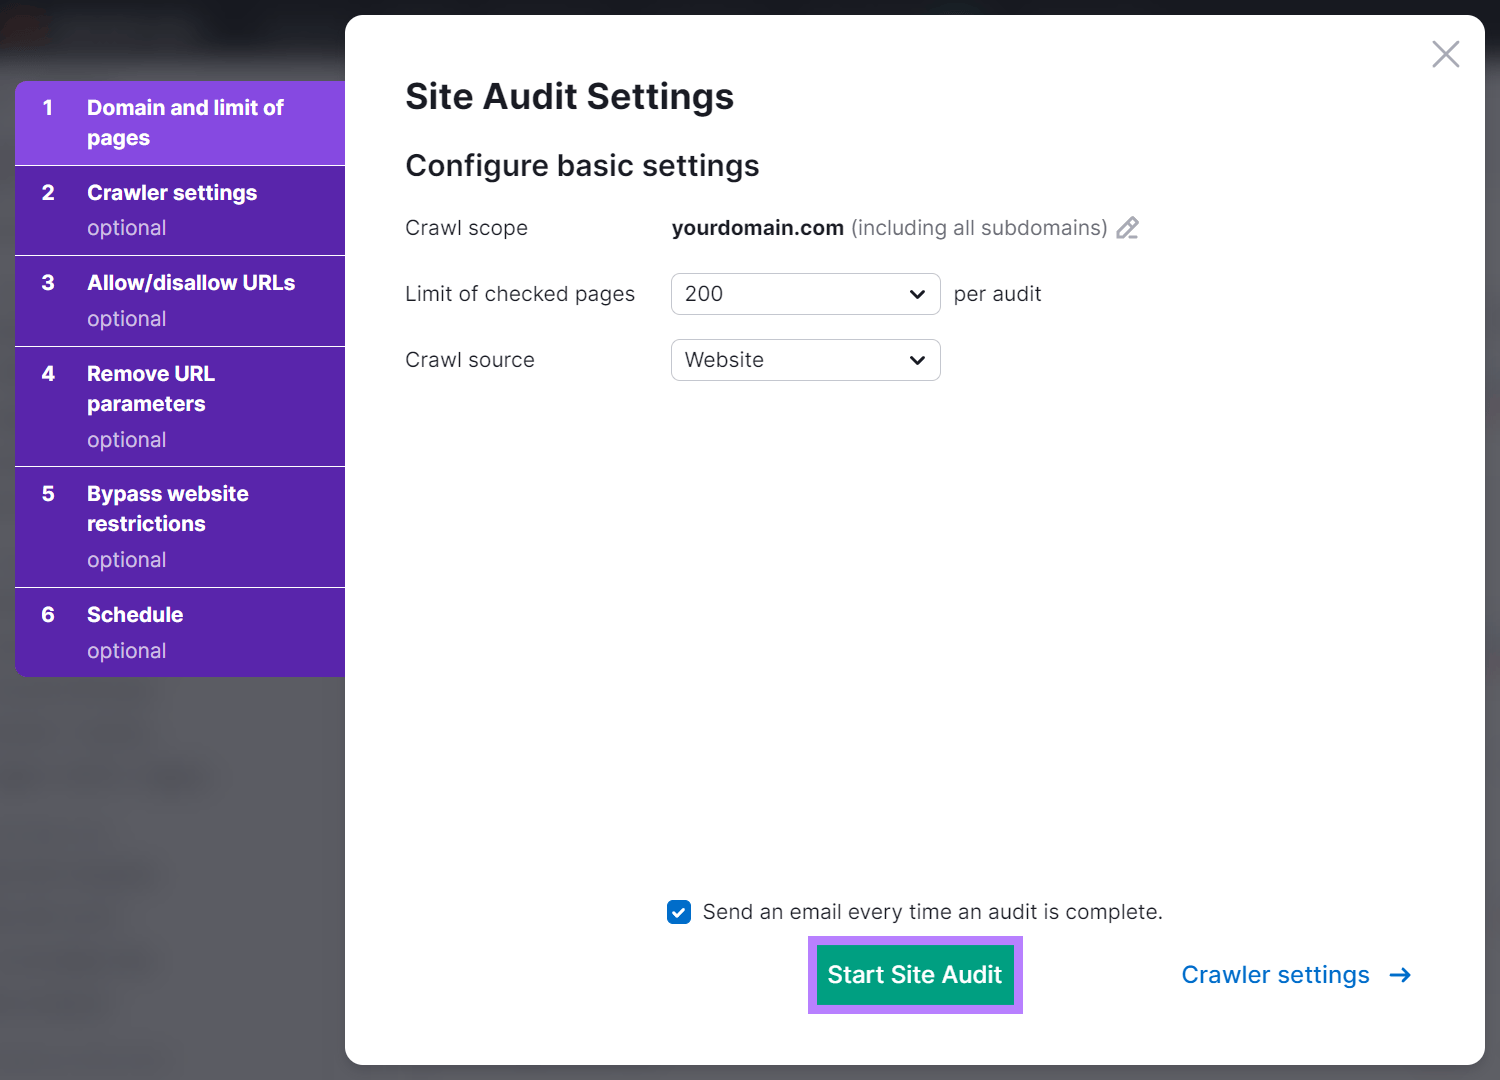 Site Audit settings configuration screen.